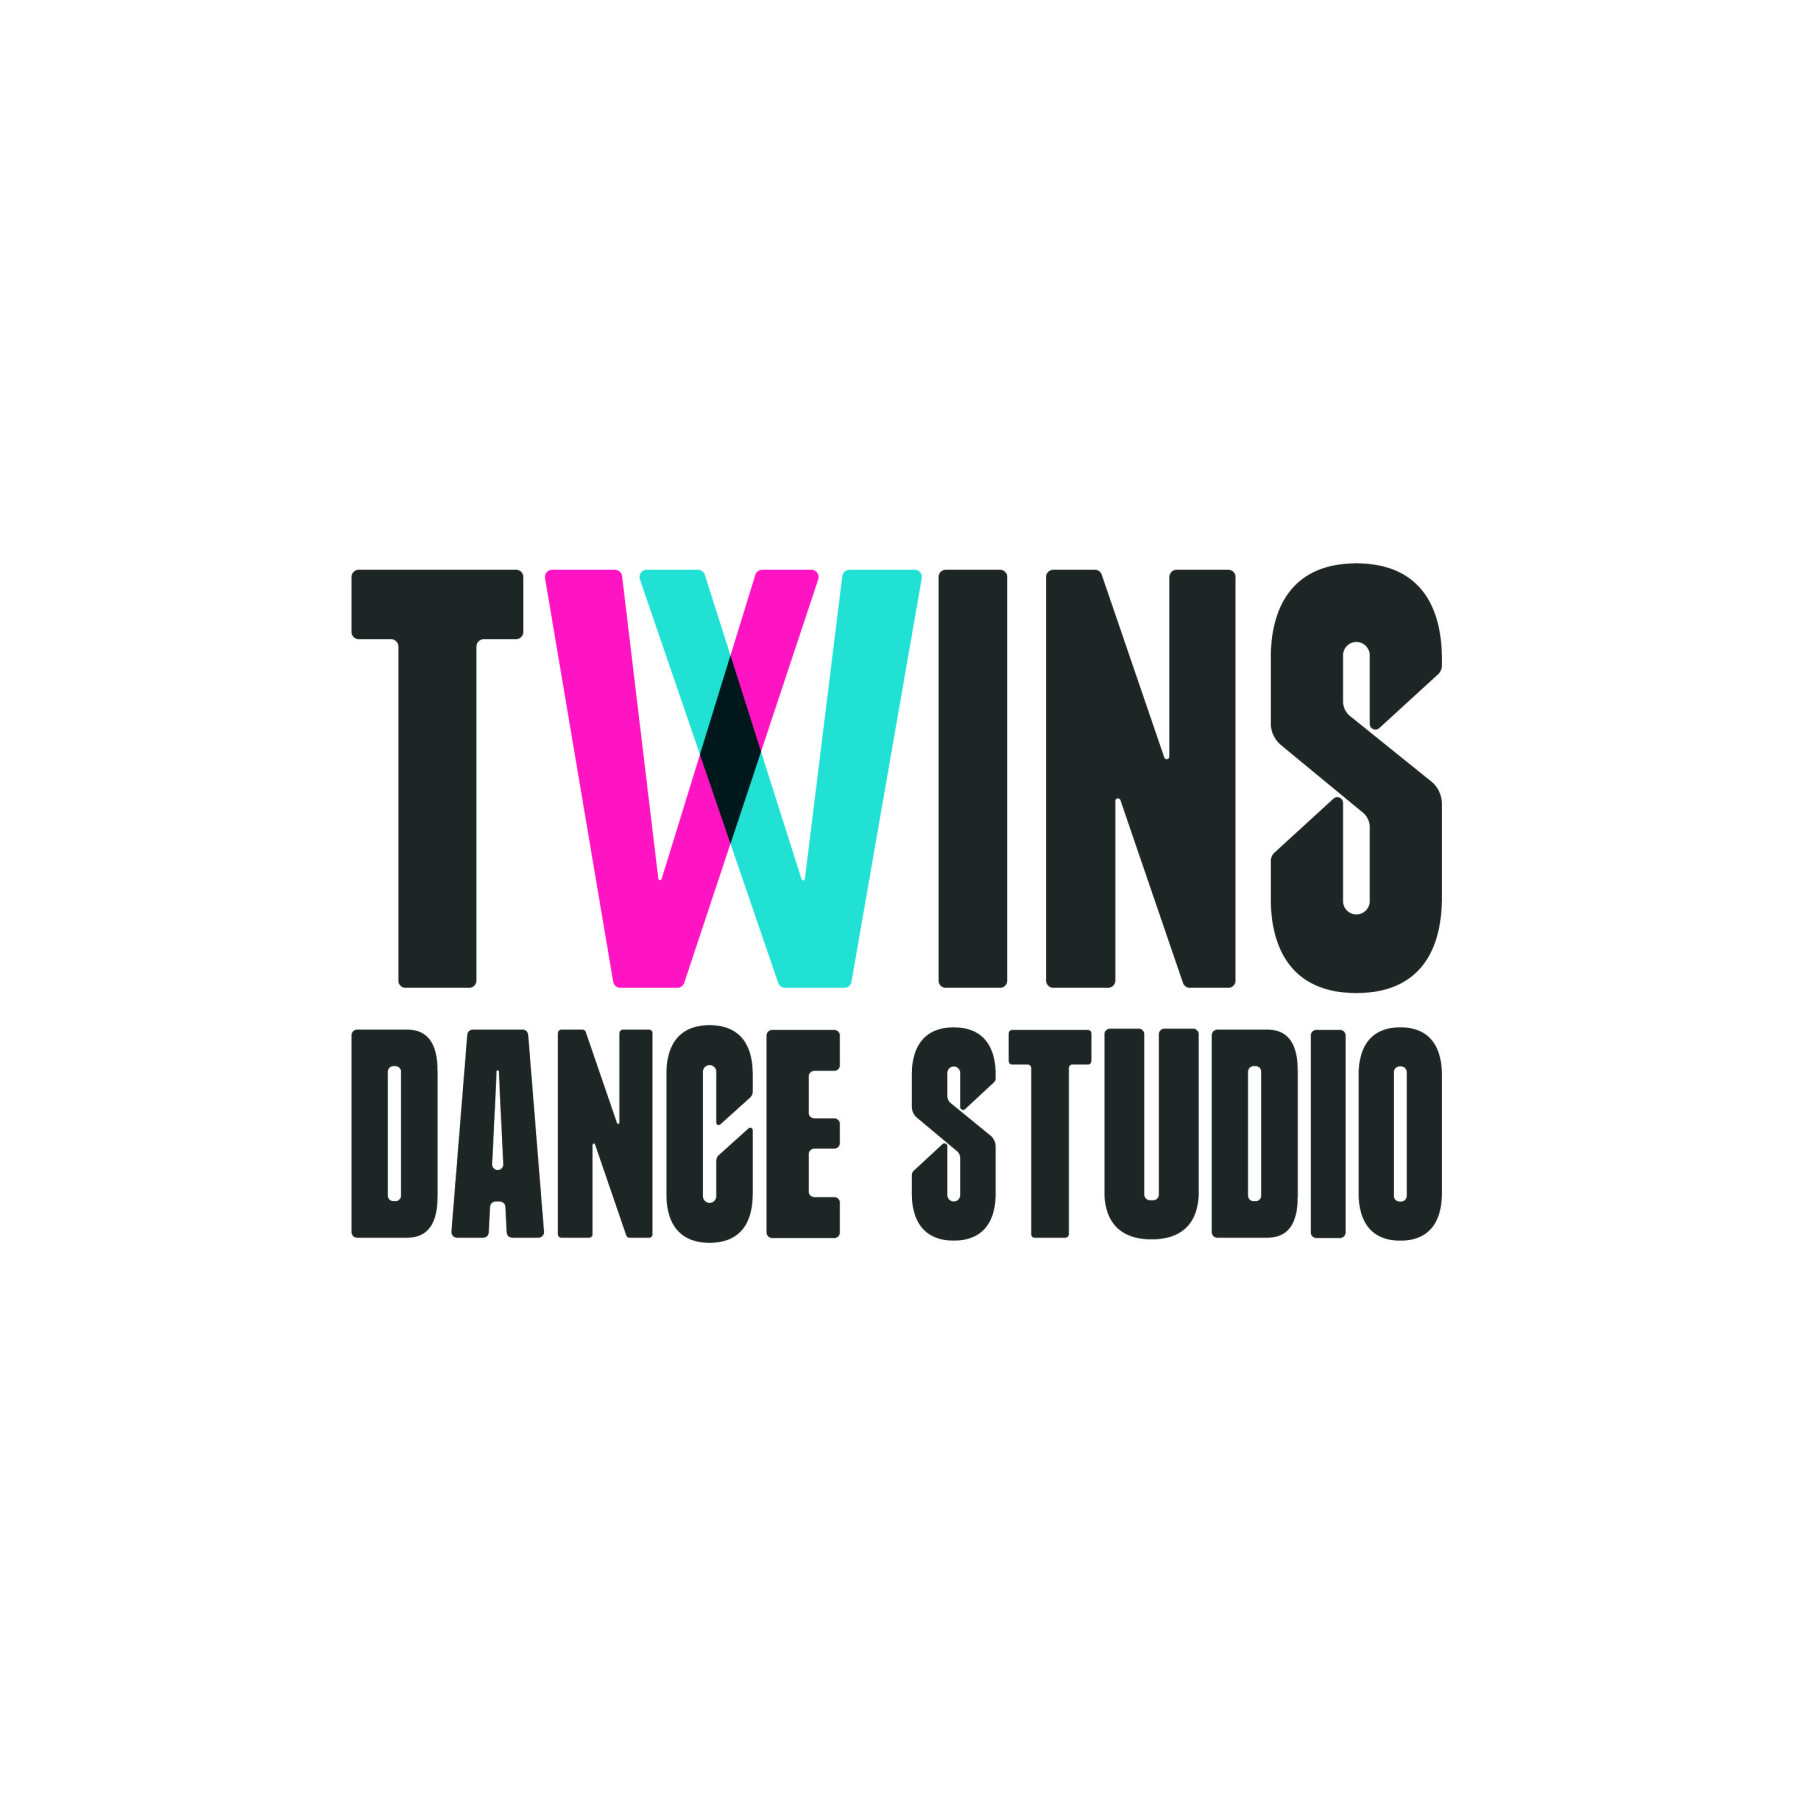 TWINS DANCE STUDIO